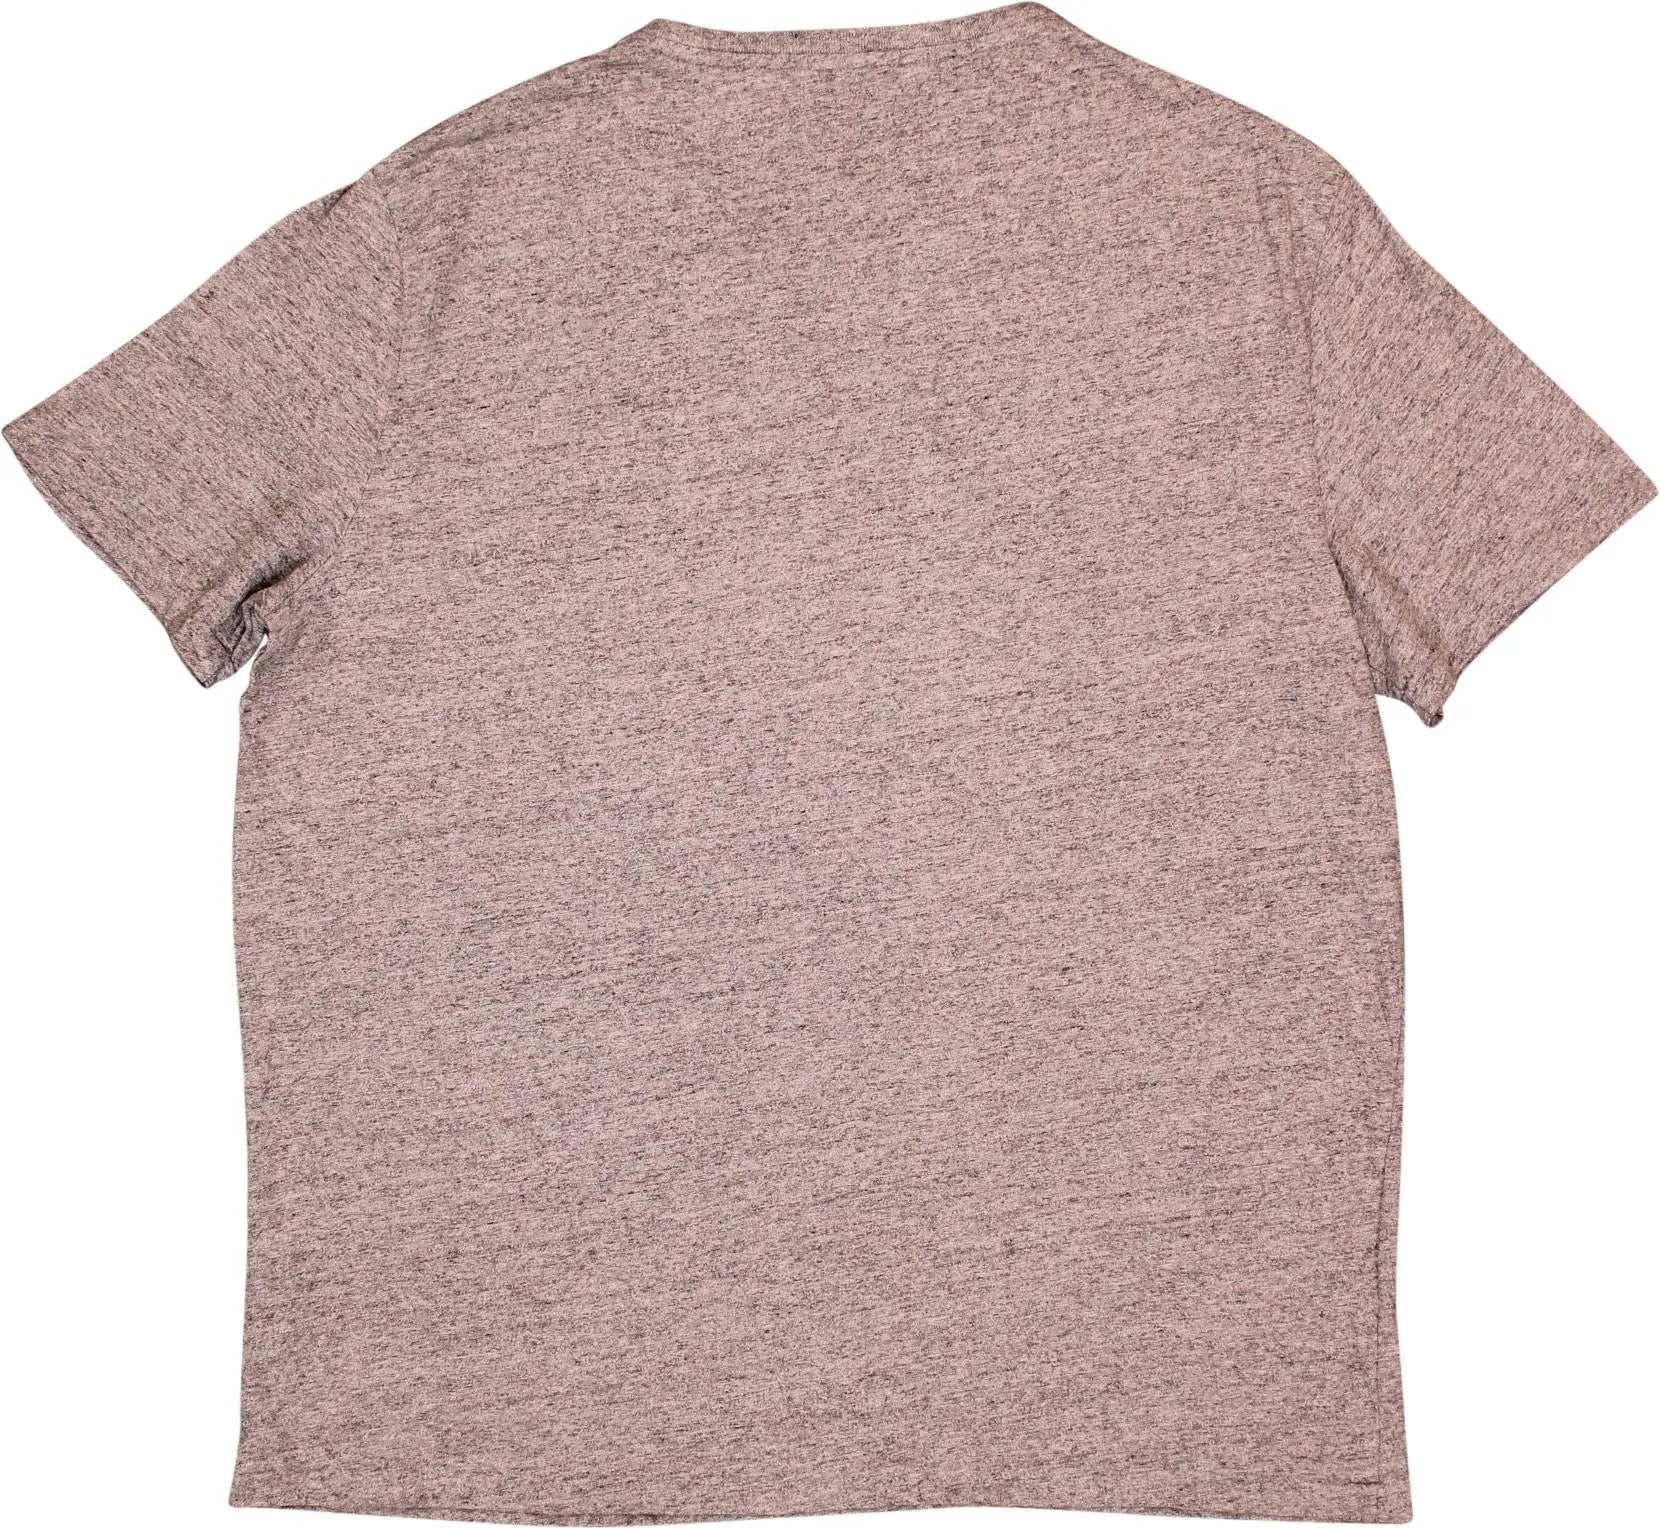 Ralph Lauren - Grey T-Shirt by Ralph Lauren- ThriftTale.com - Vintage and second handclothing